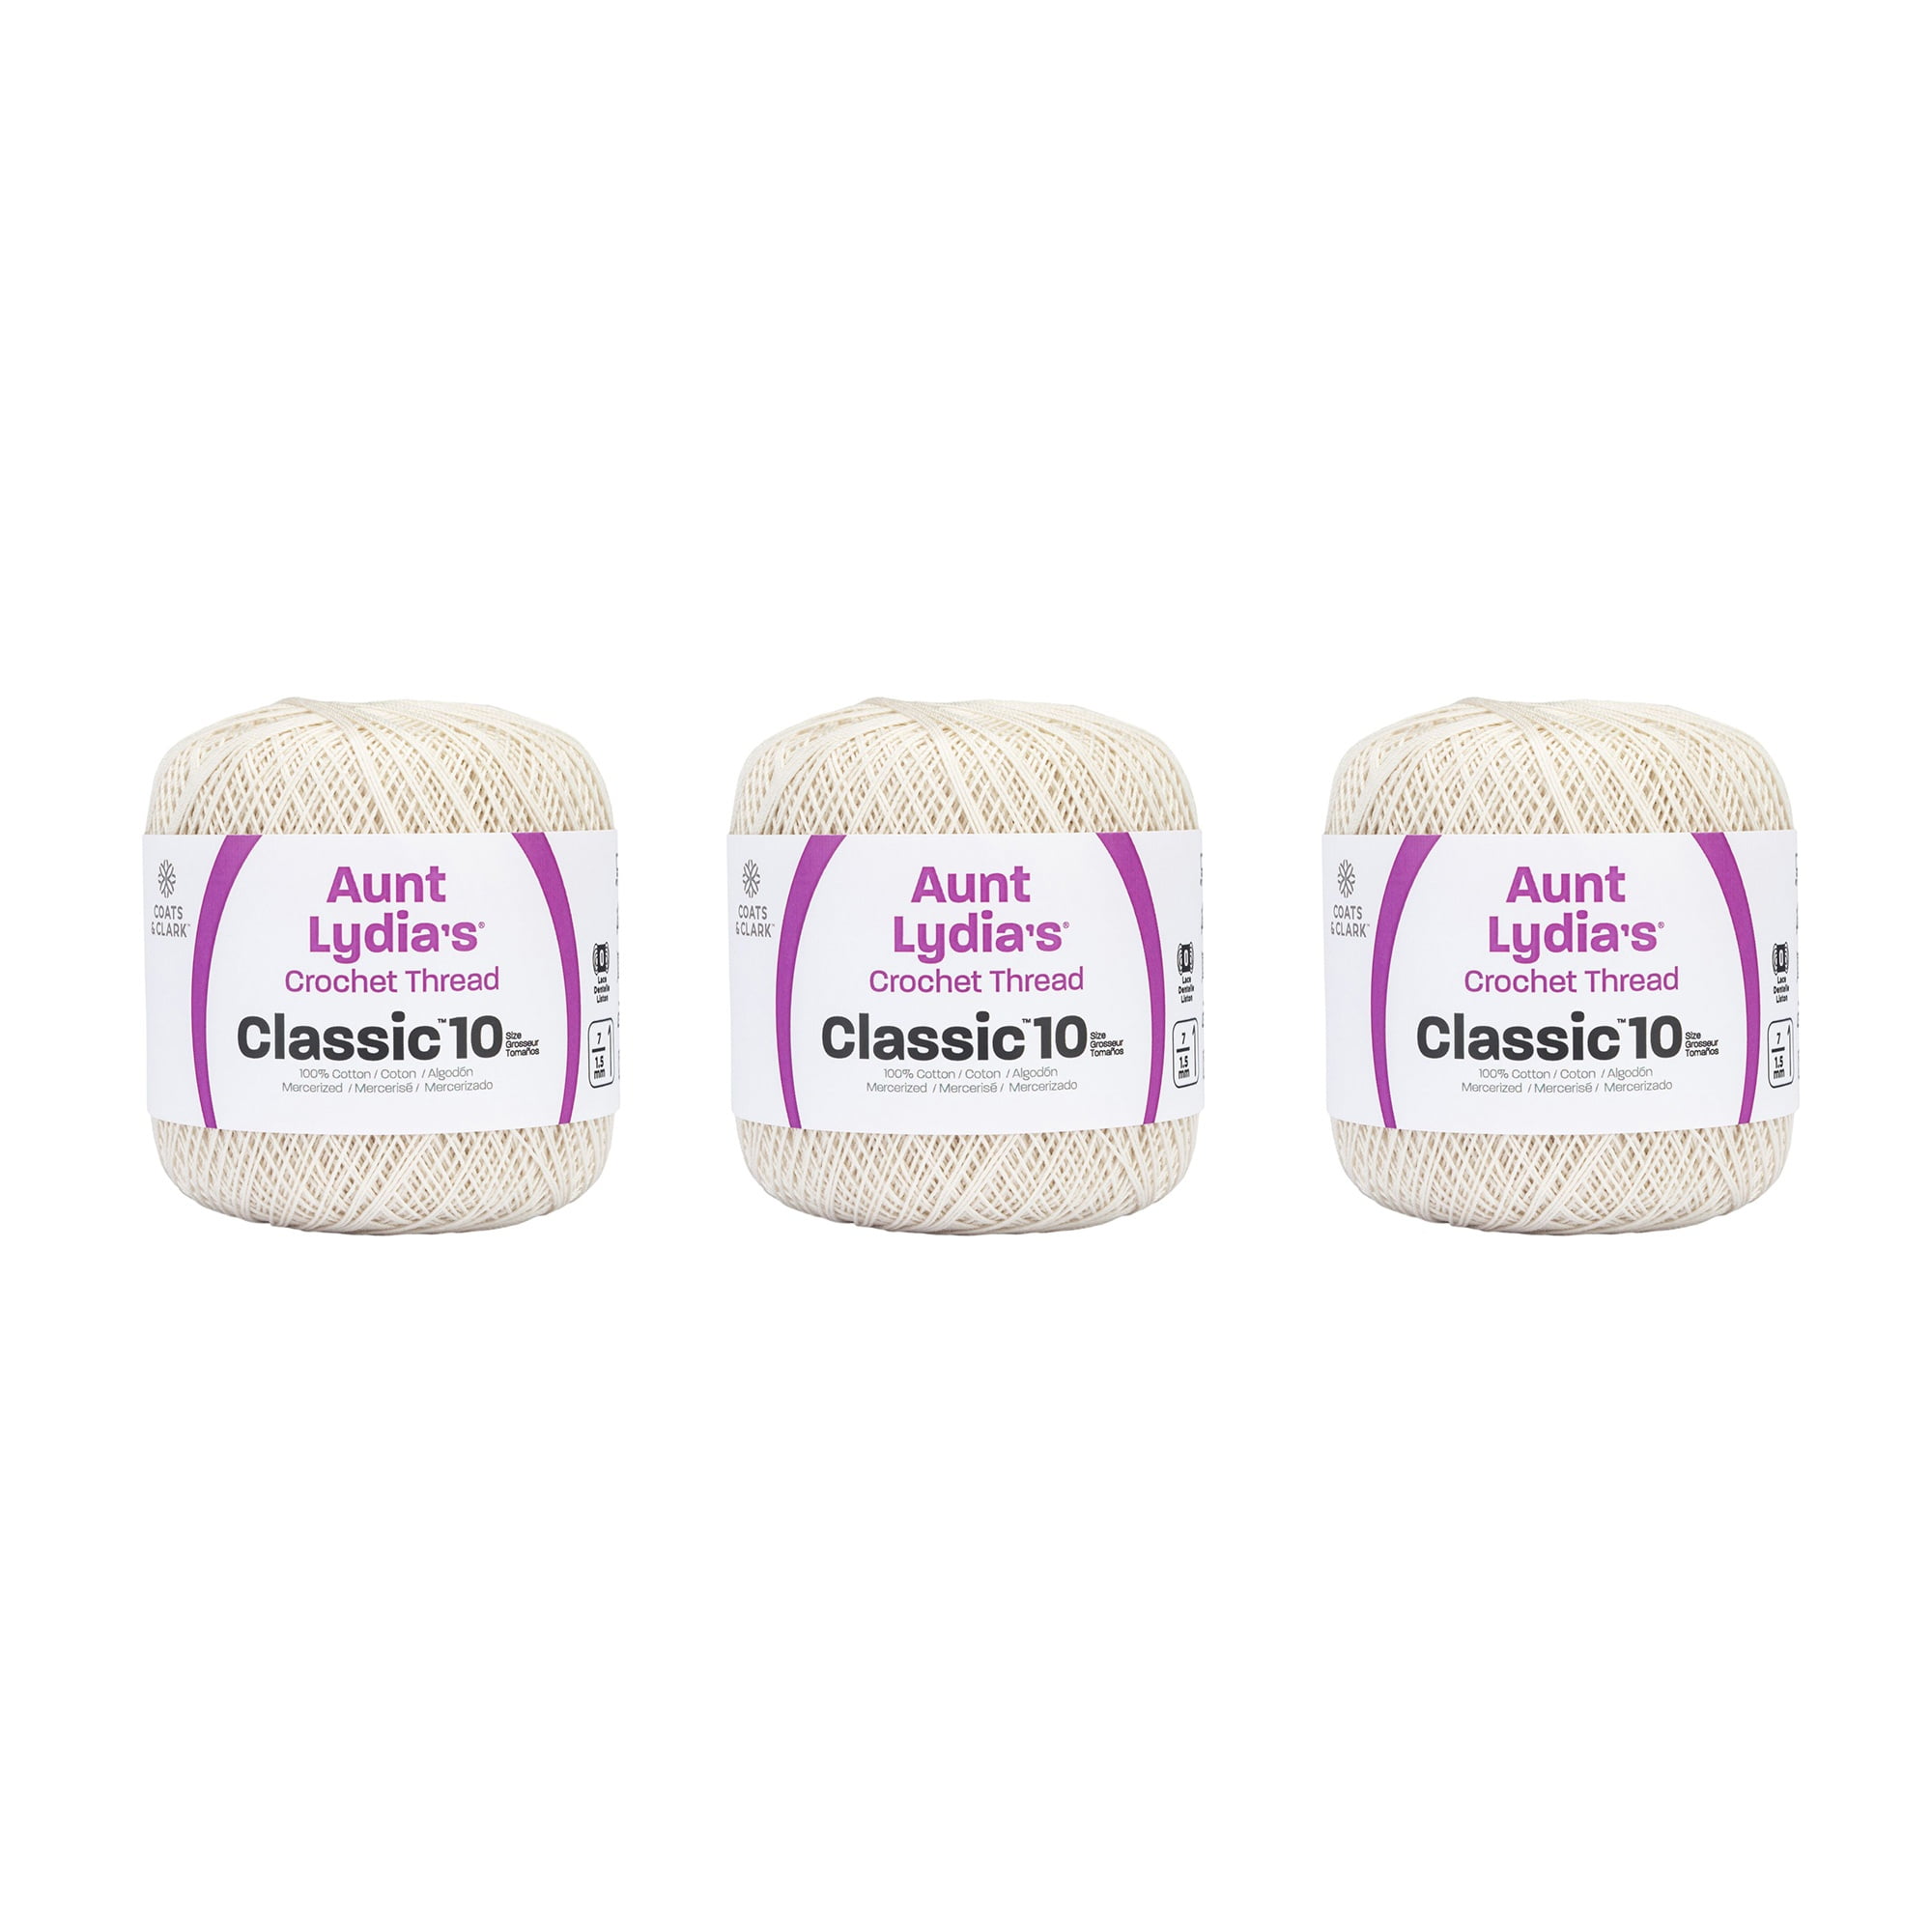 Aunt Lydia's Crochet Thread - Size 3 - (2-Pack) White